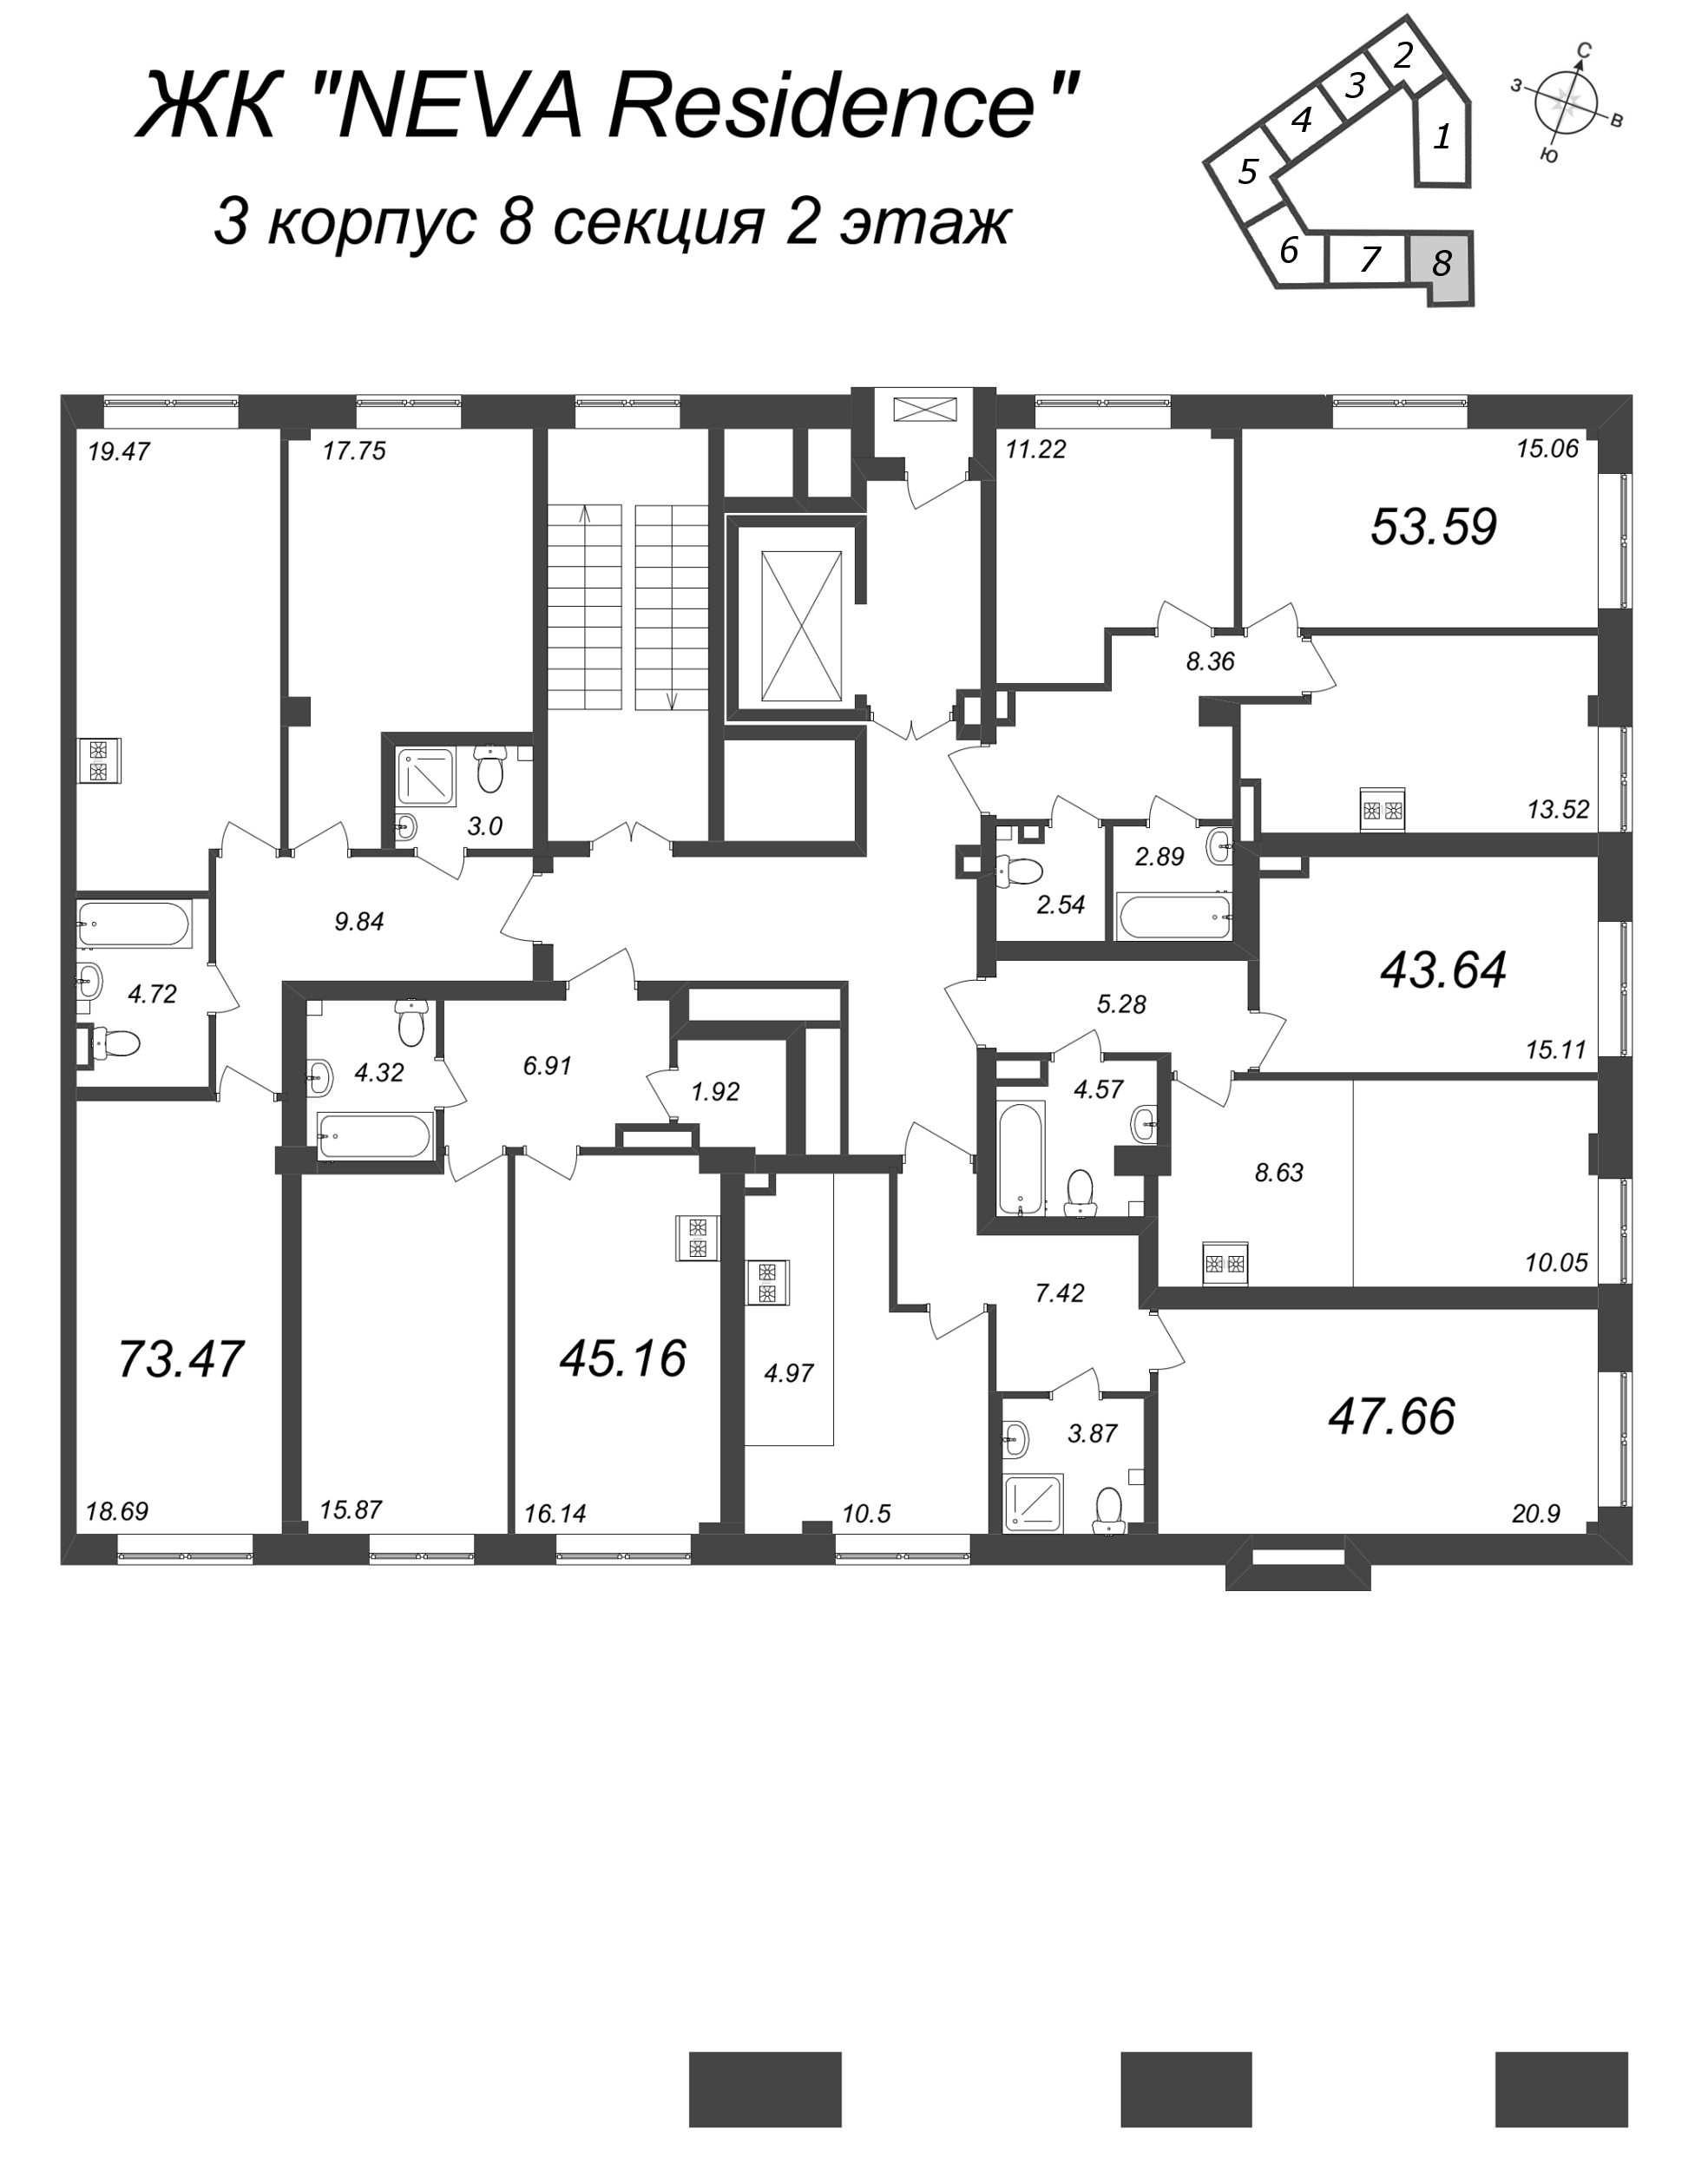 2-комнатная (Евро) квартира, 47.66 м² - планировка этажа